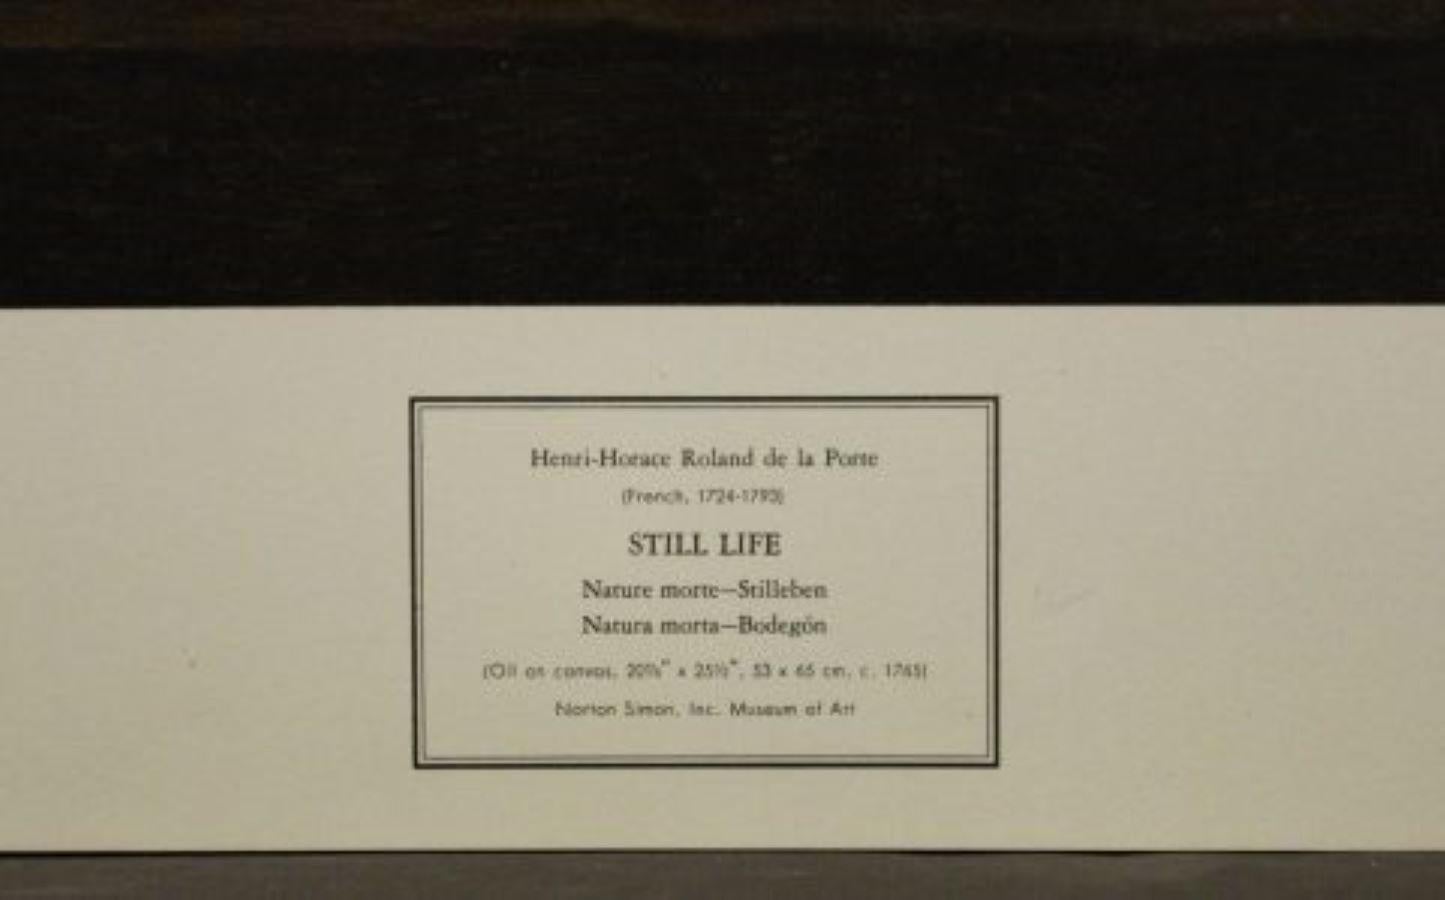 “Still Life” Poster. Copyright 1970 New York Society Ltd.  - Print by Henri-Horace Roland de la Porte